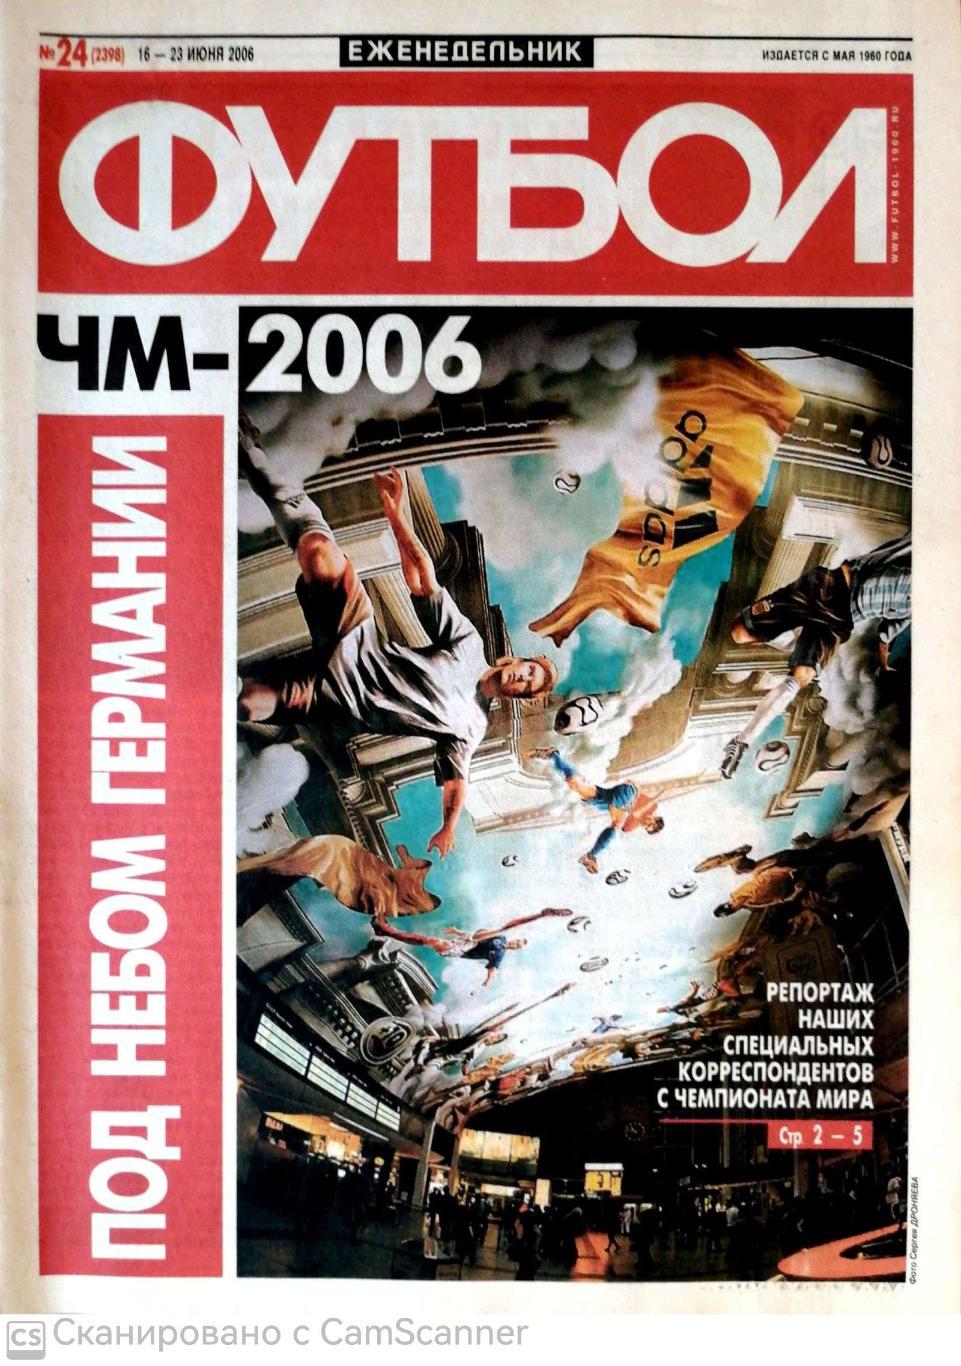 Еженедельник «Футбол» (Москва). 2006 год. №24